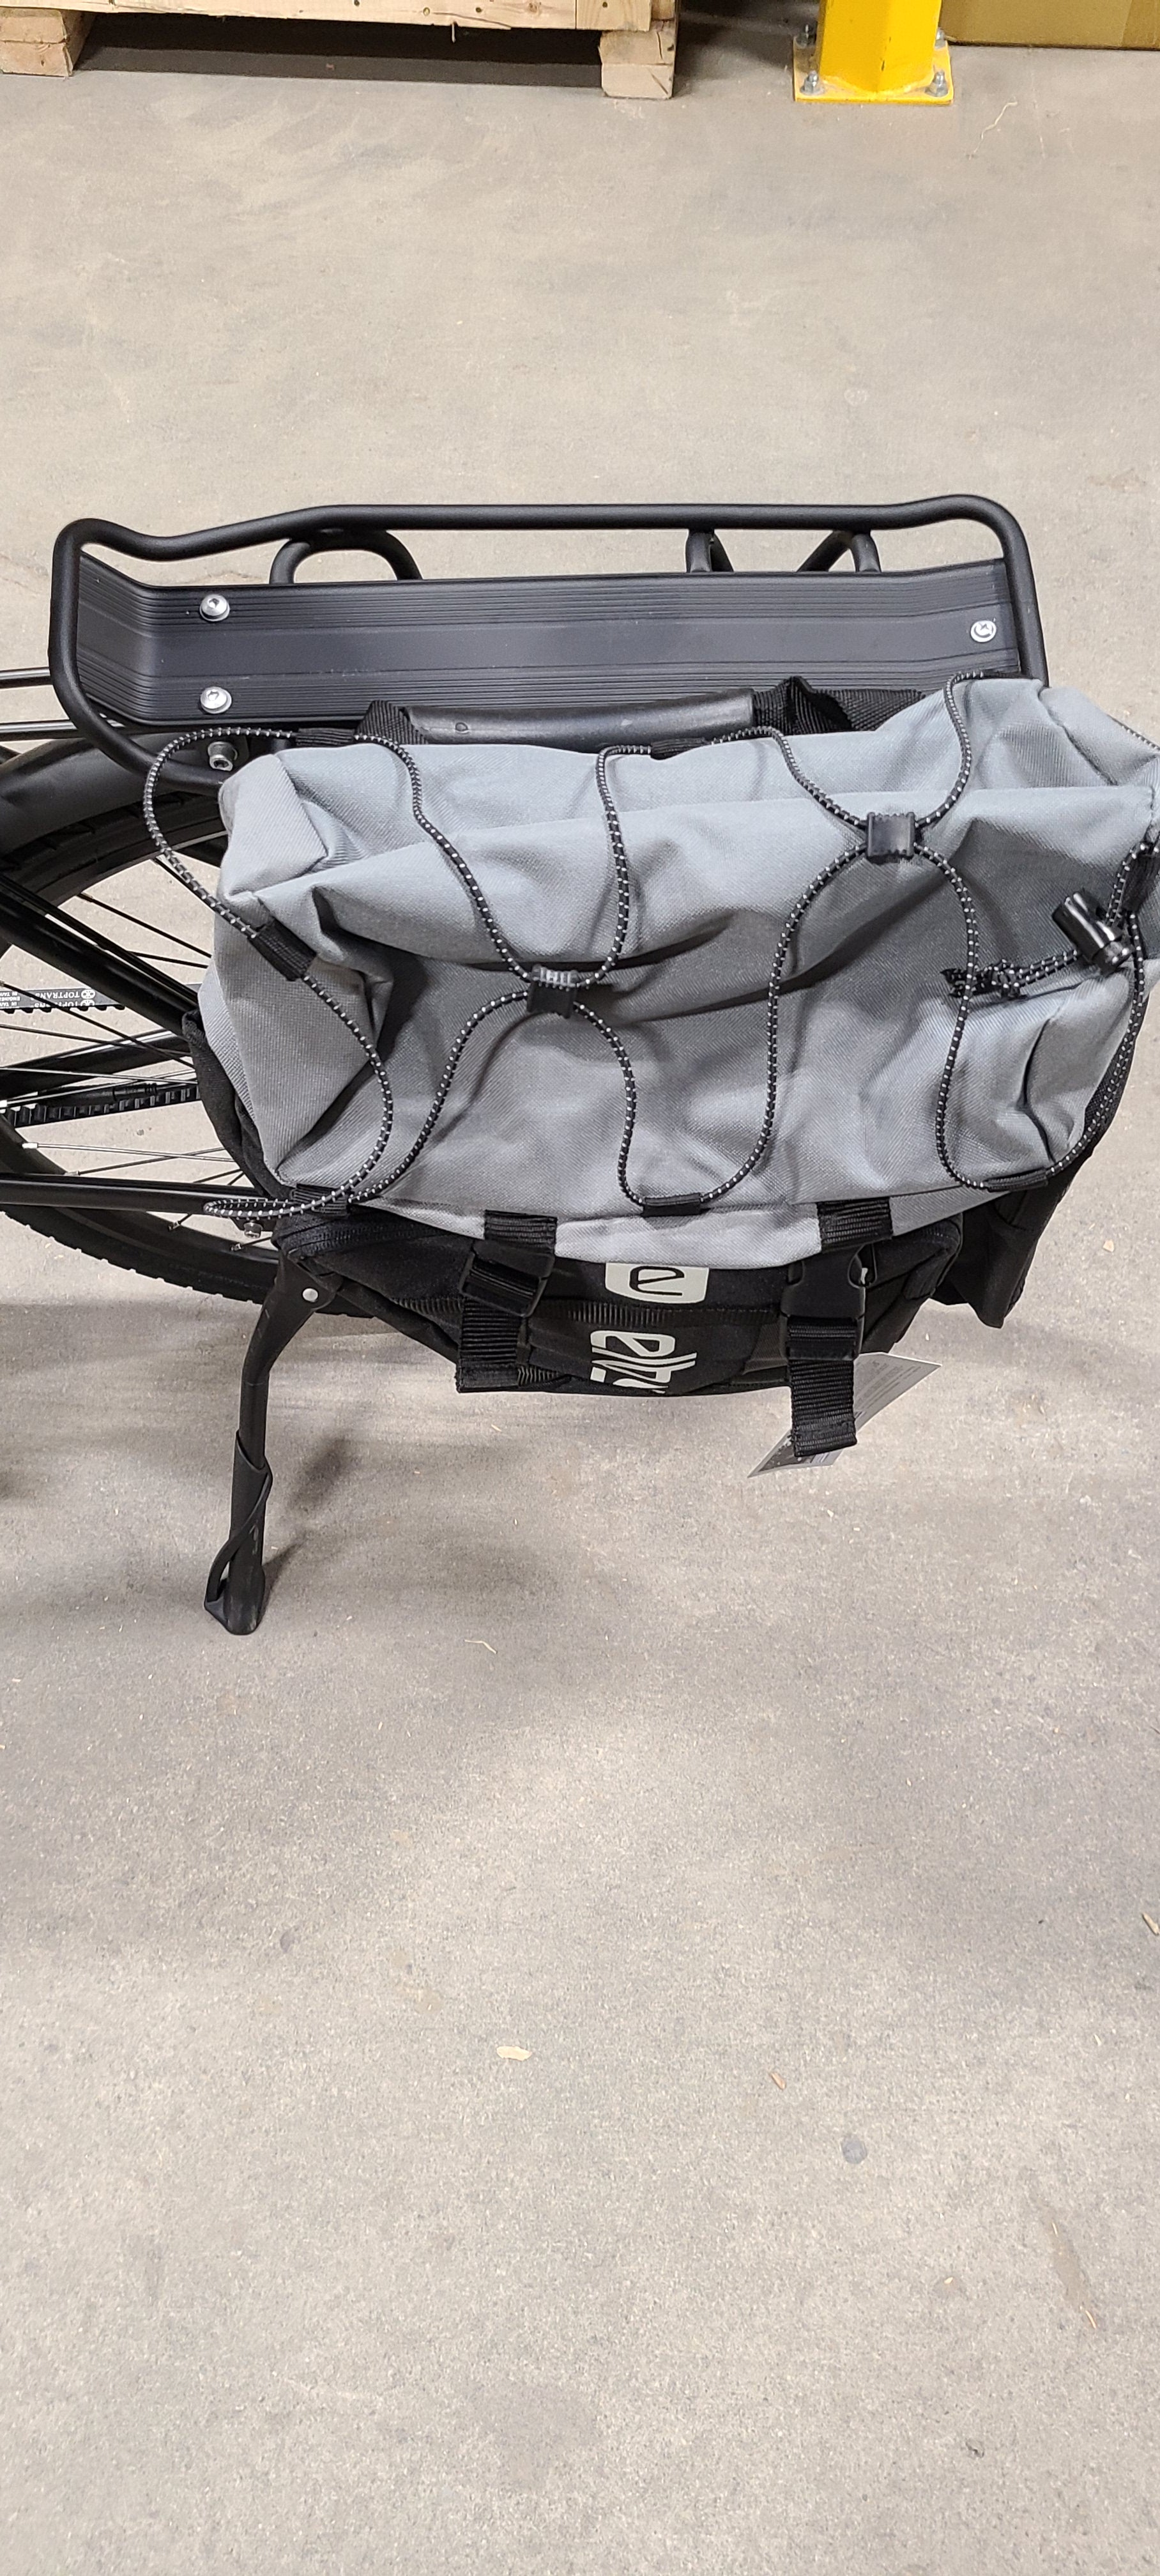 Urban Crit - Axiom Journey Bike Rack